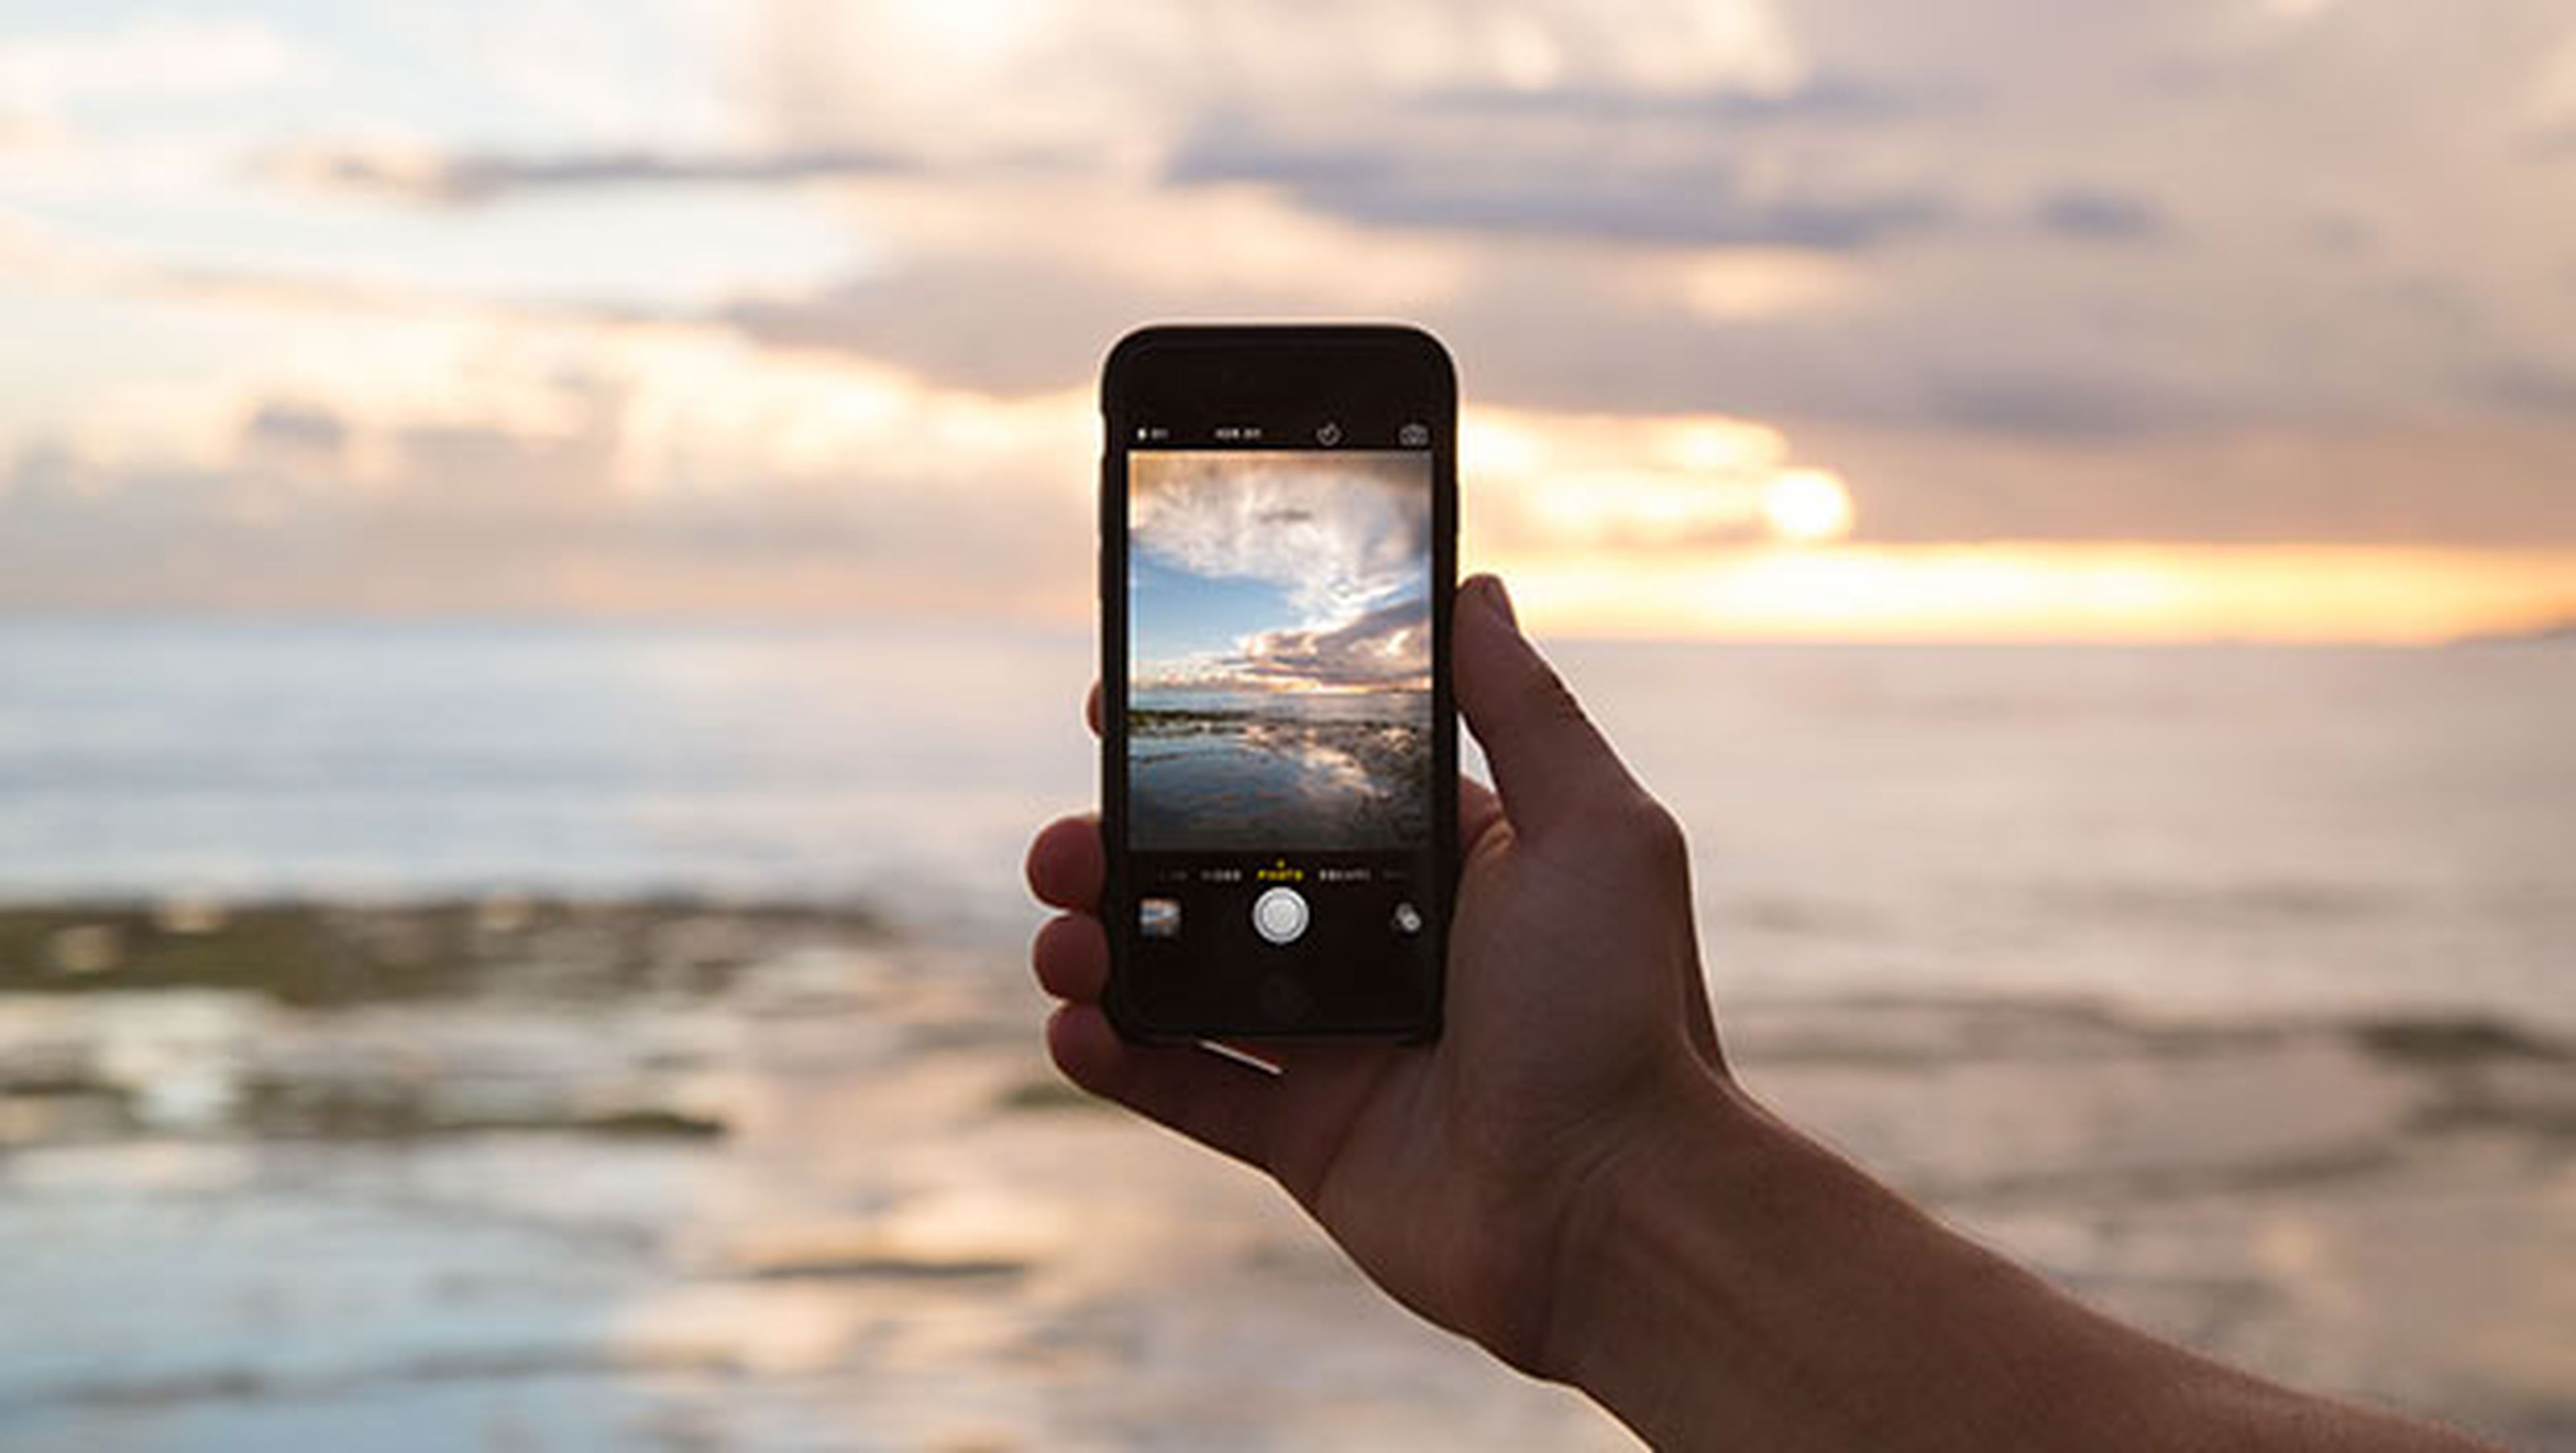 Revelado digital de las fotos desde tu smartphone